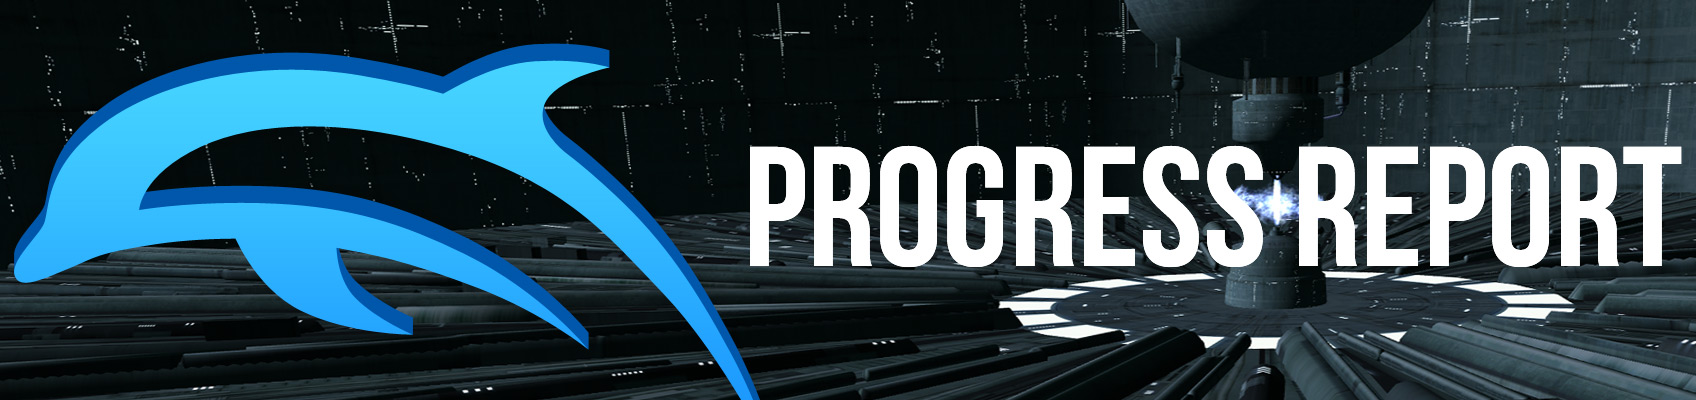 Progressreportheader-January2015.jpg